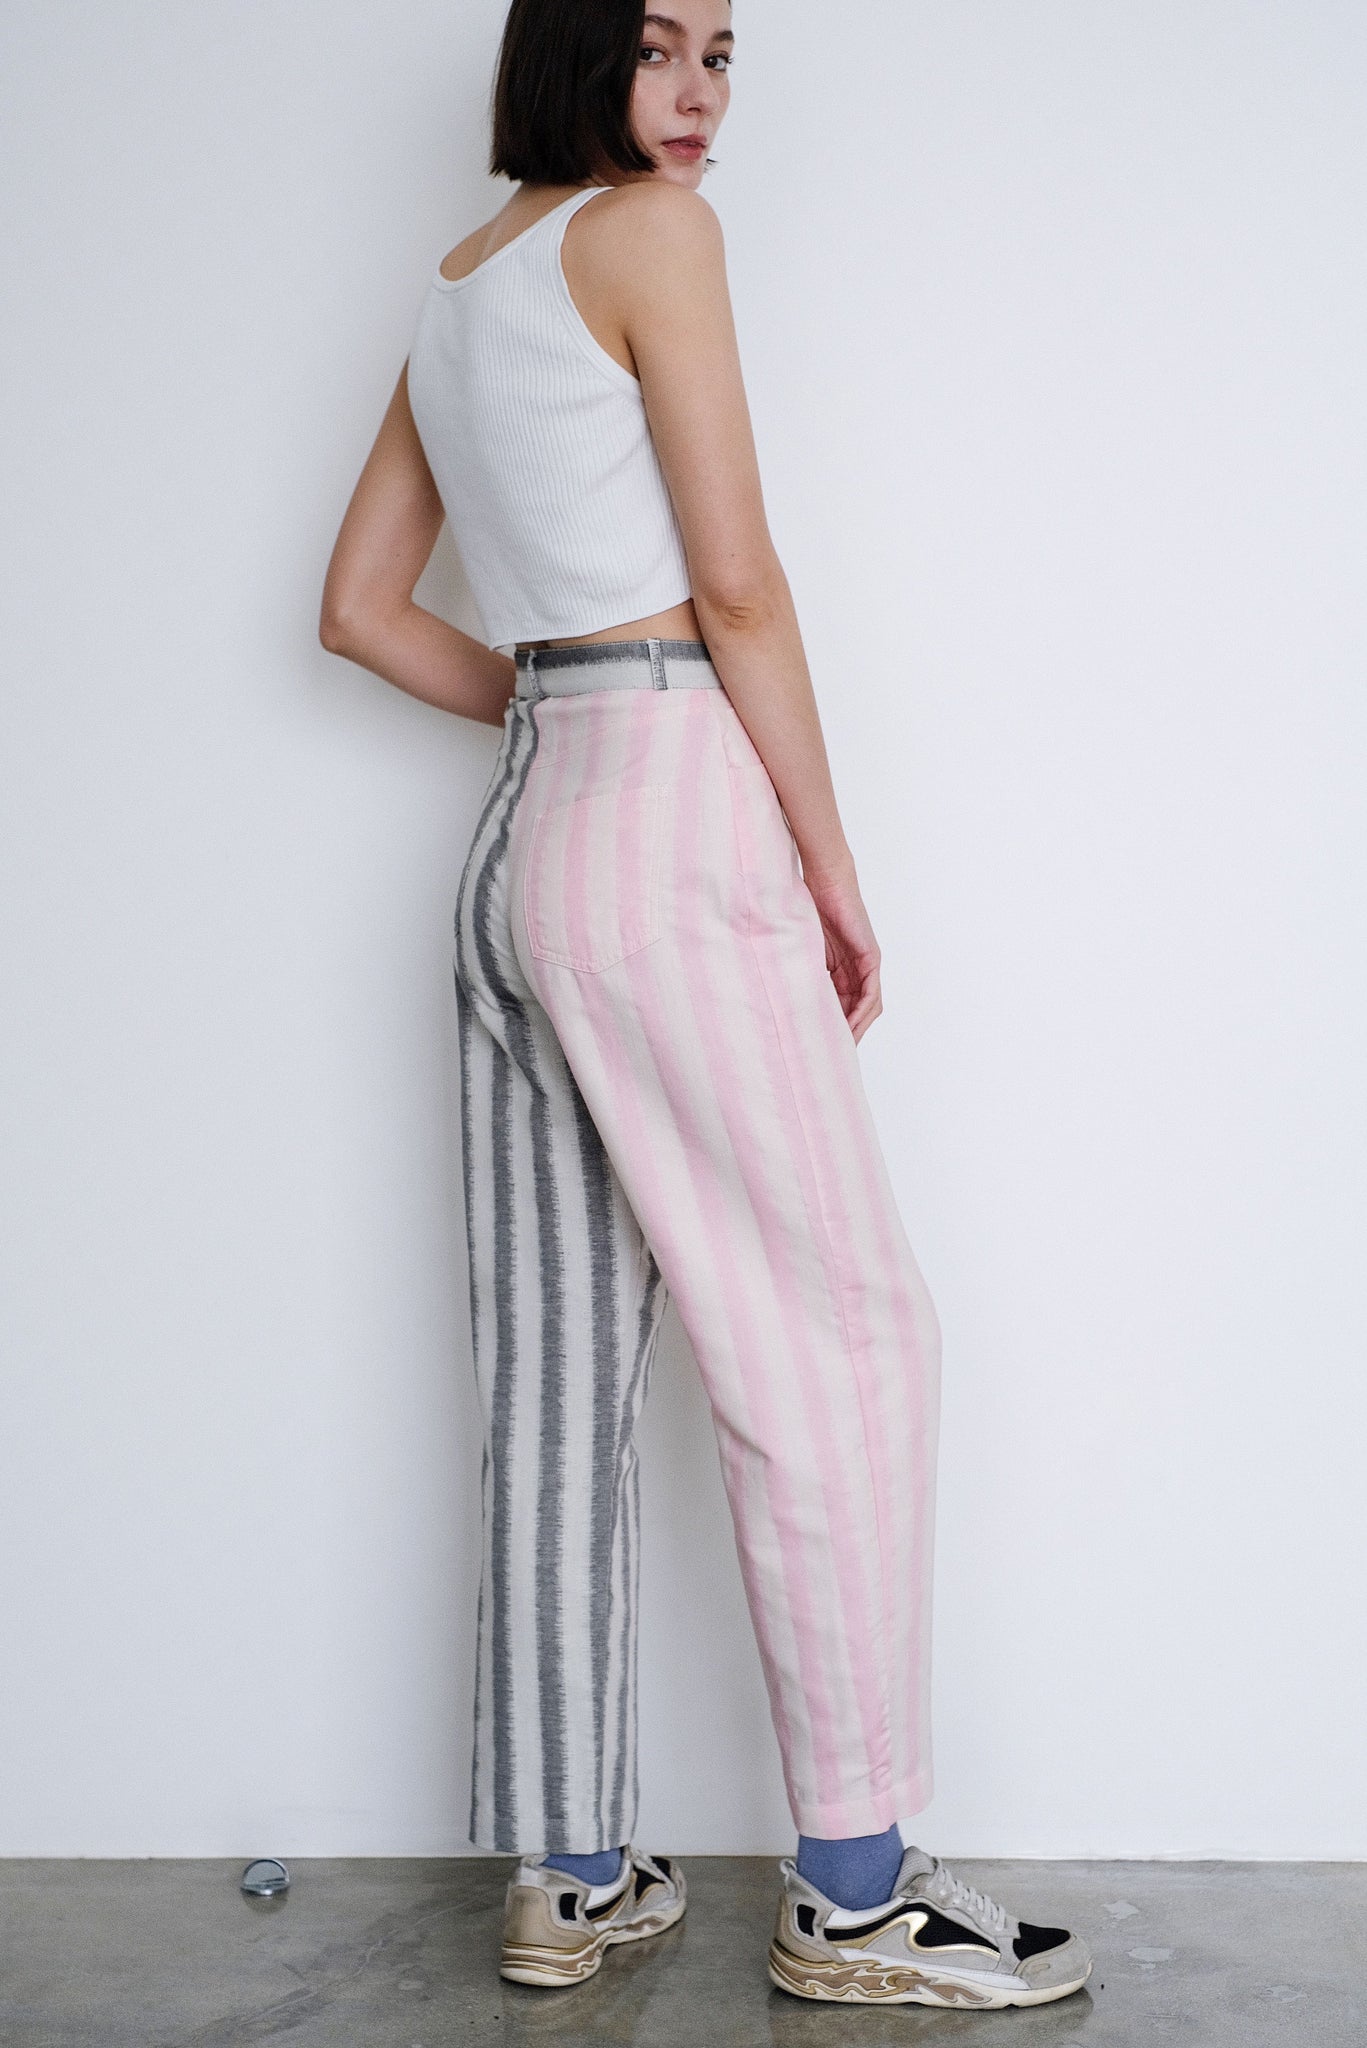 Rita Row Pink and Grey Striped Pant